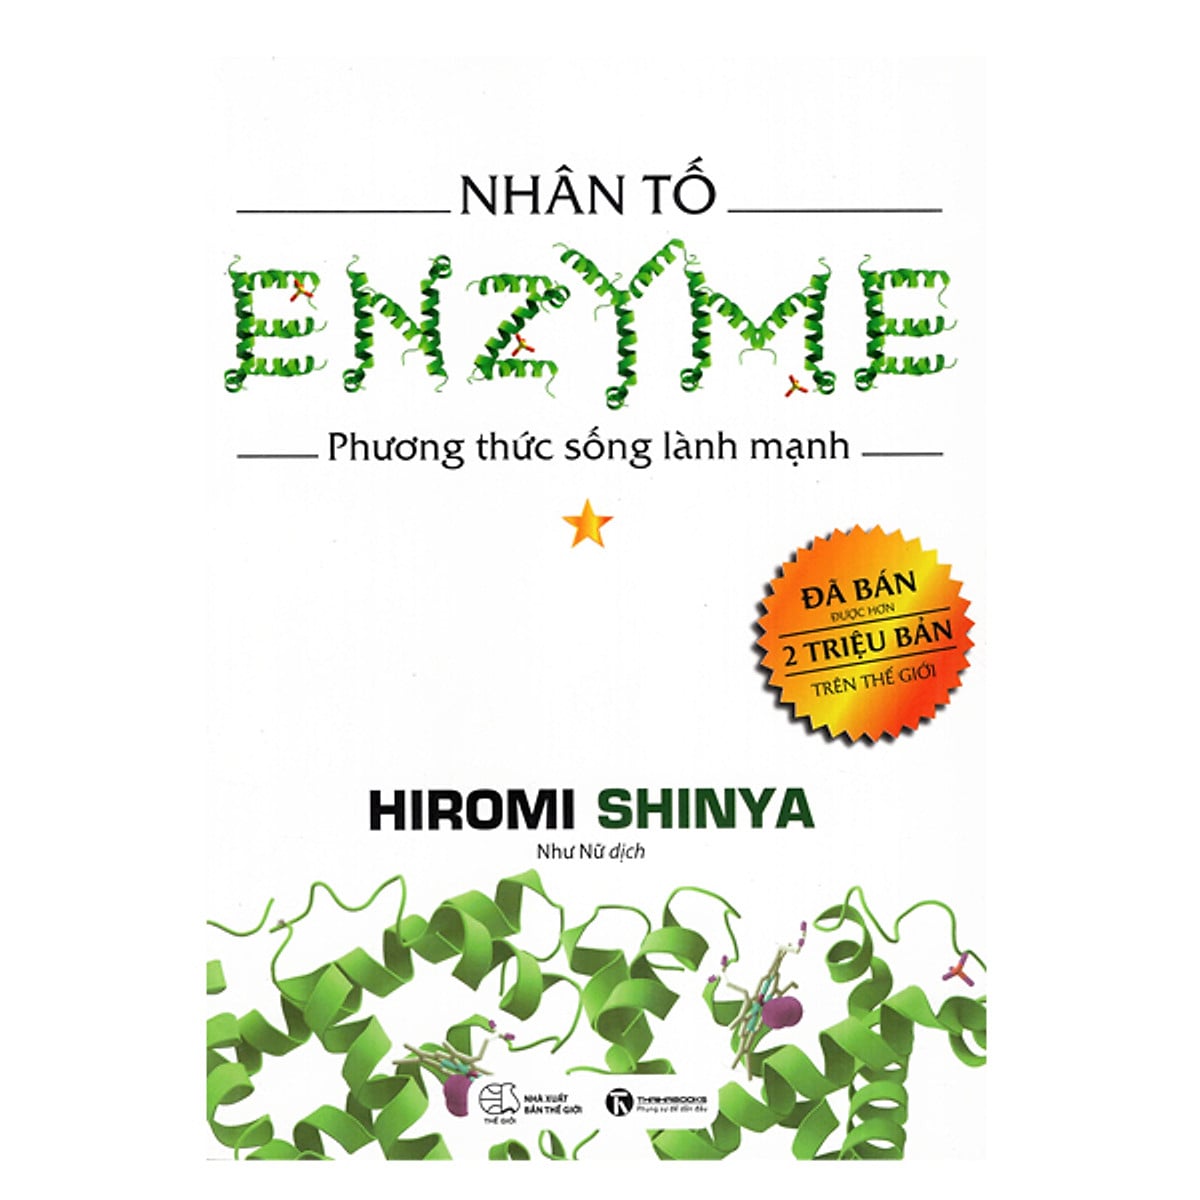 06-nhan to enzyme - phuong thuc song lanh manh-min